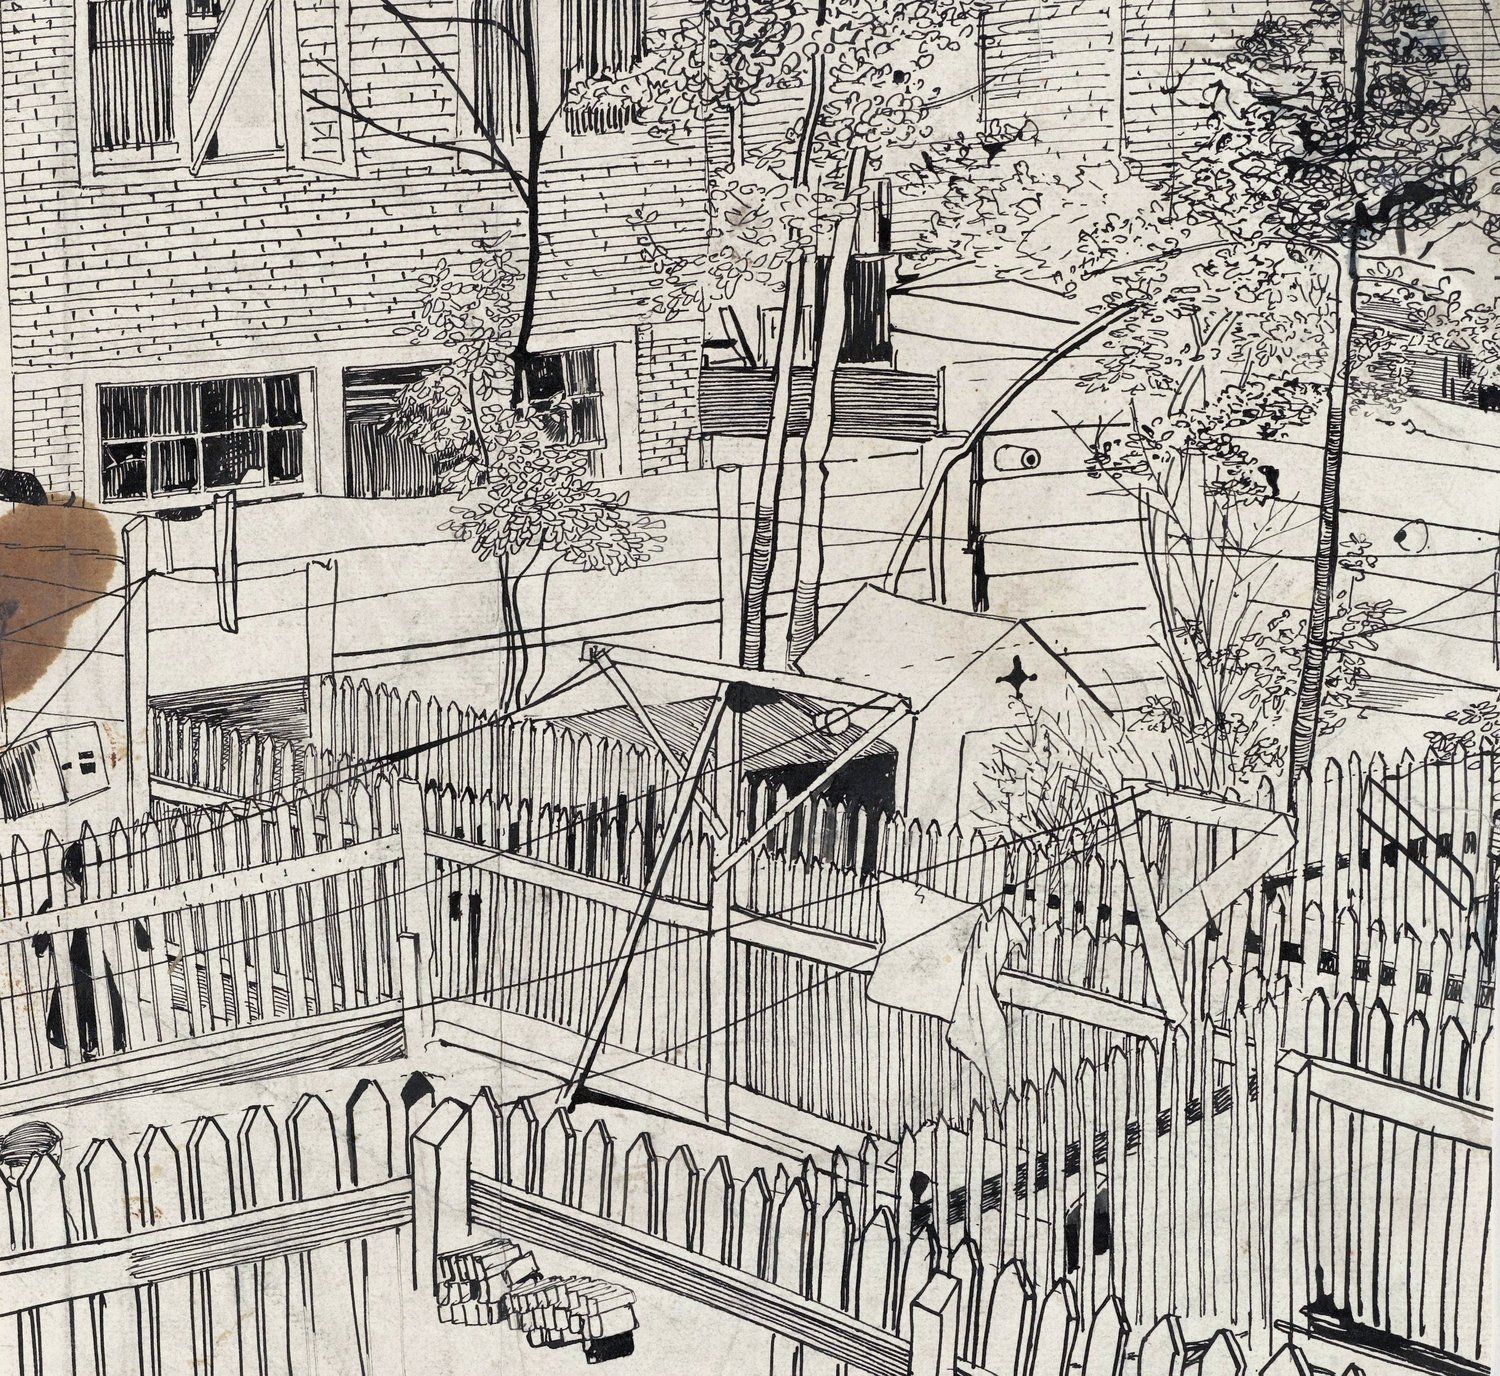 Binnenplaats met houten hekken en tuintjes (1874)